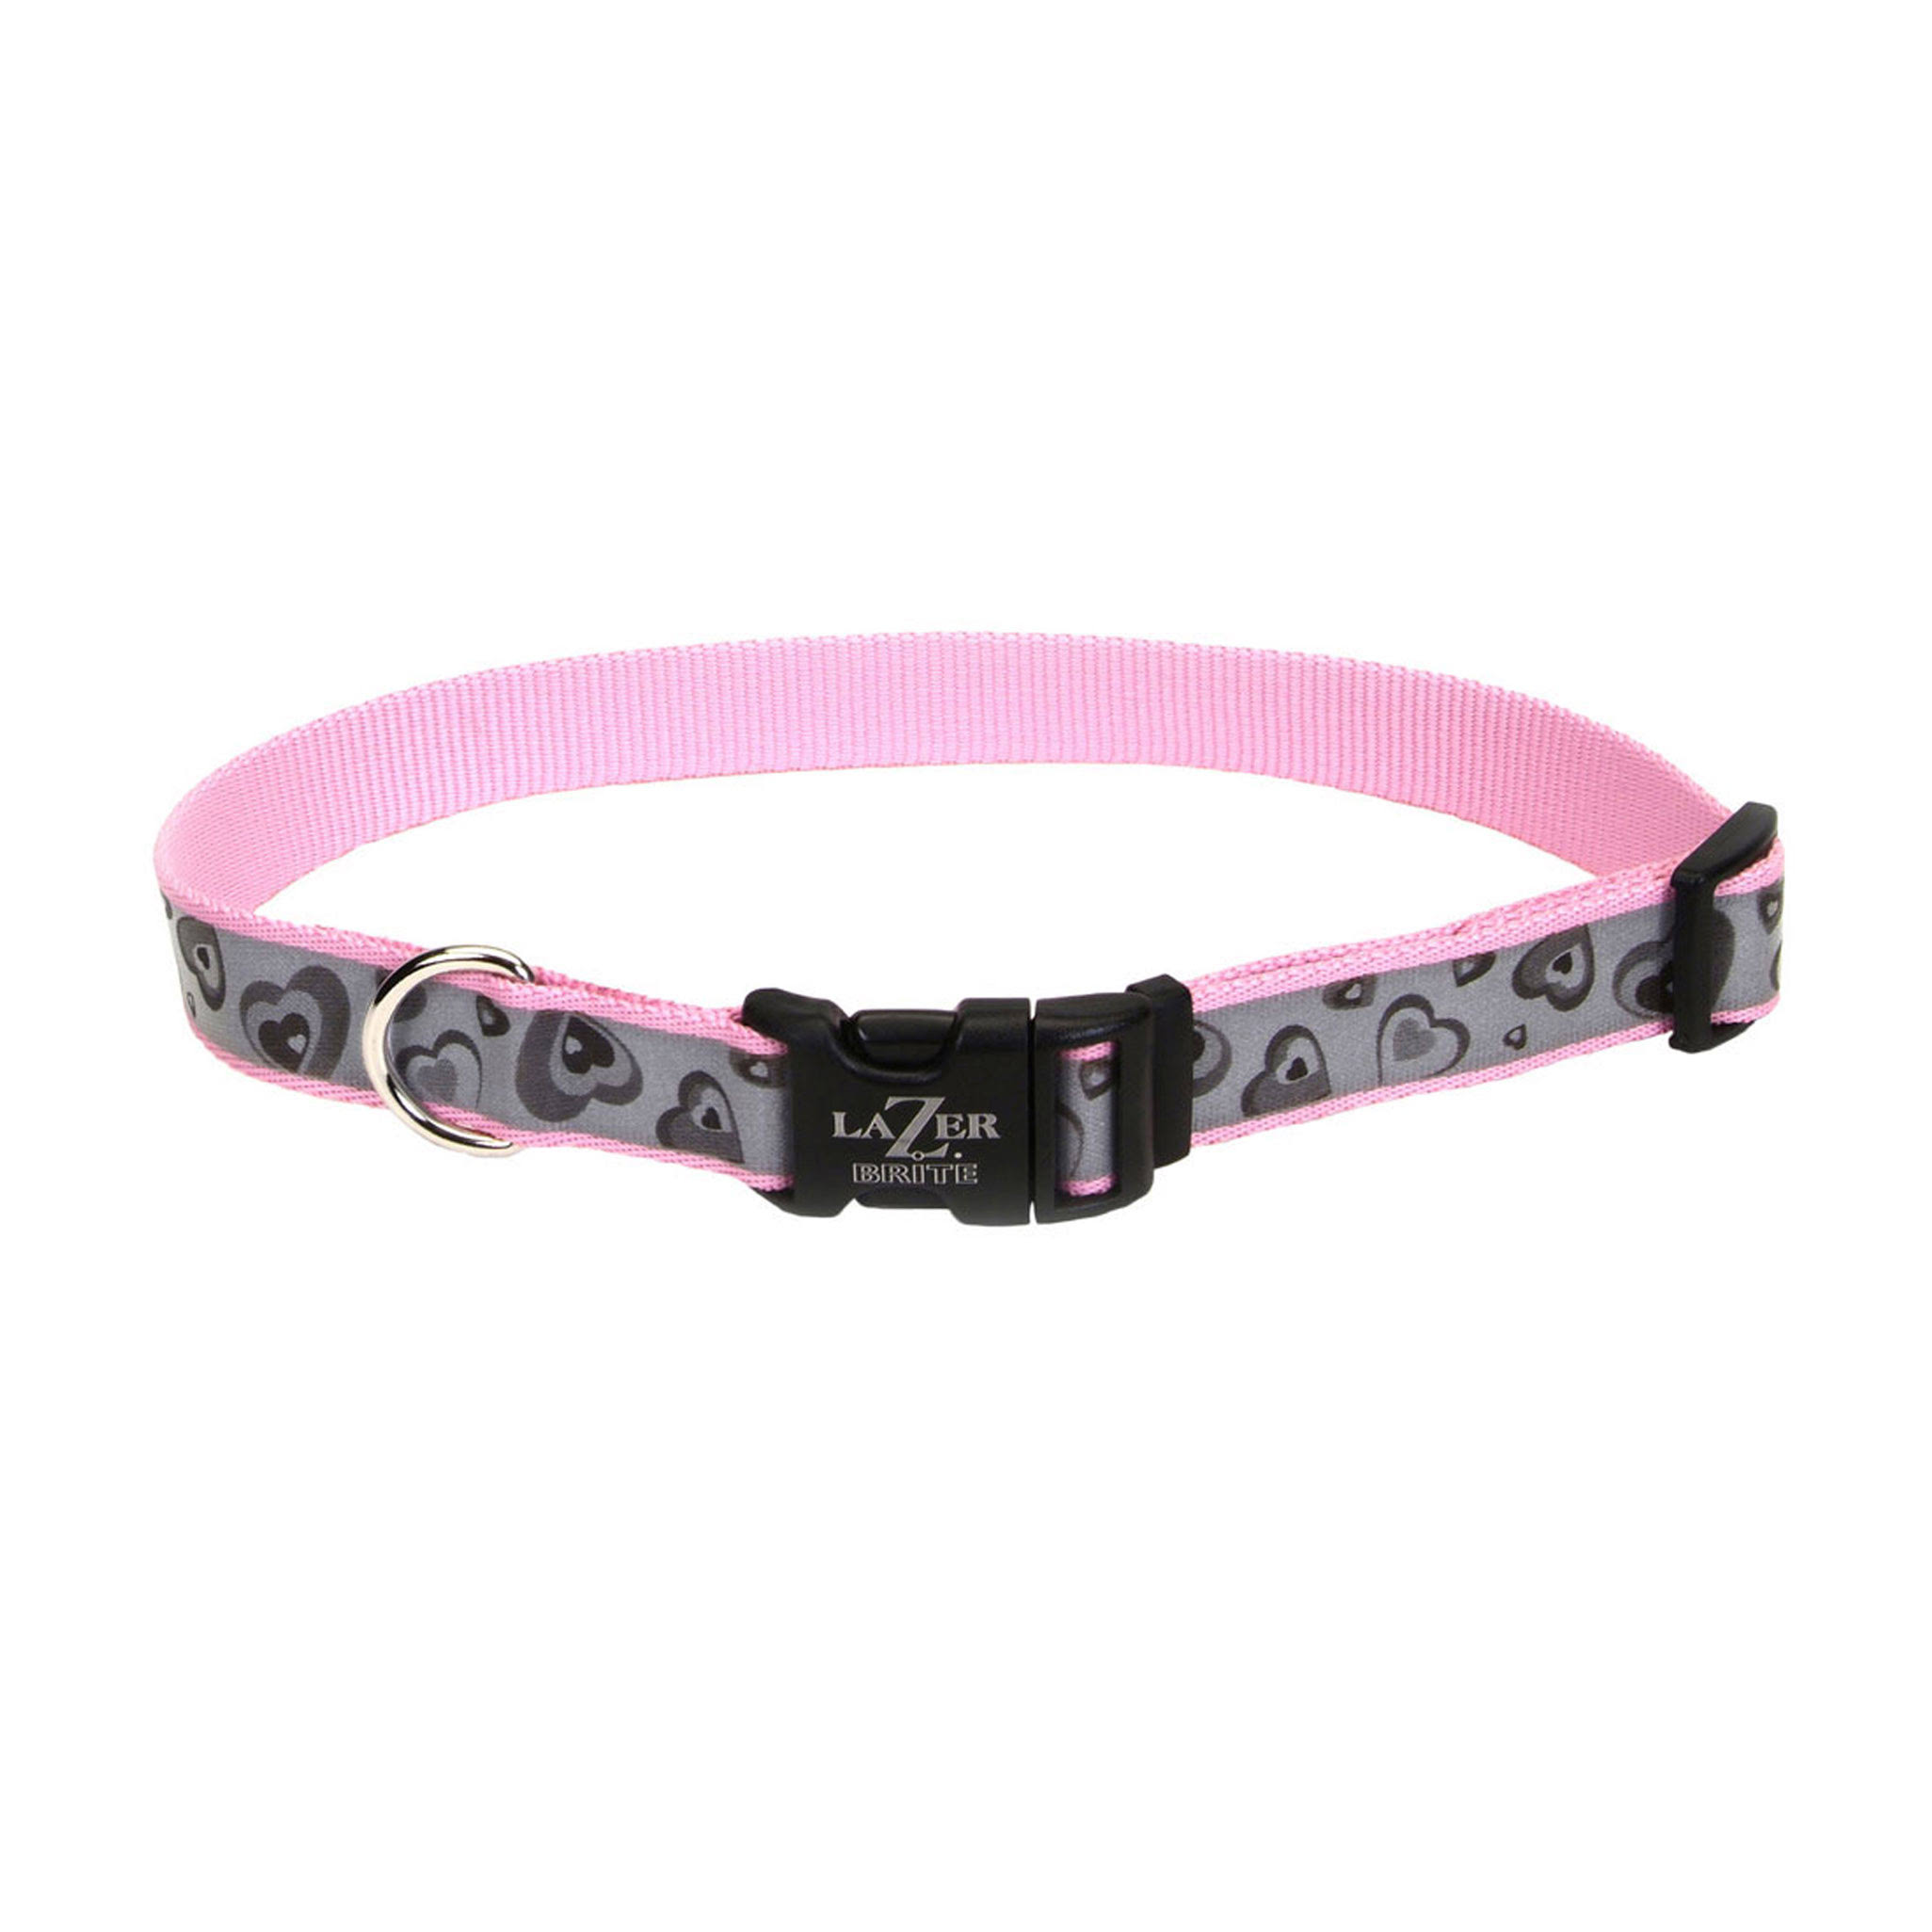 Lazer Brite Reflective Dog Collar - 5/8" x 12-18", Pink with Hearts